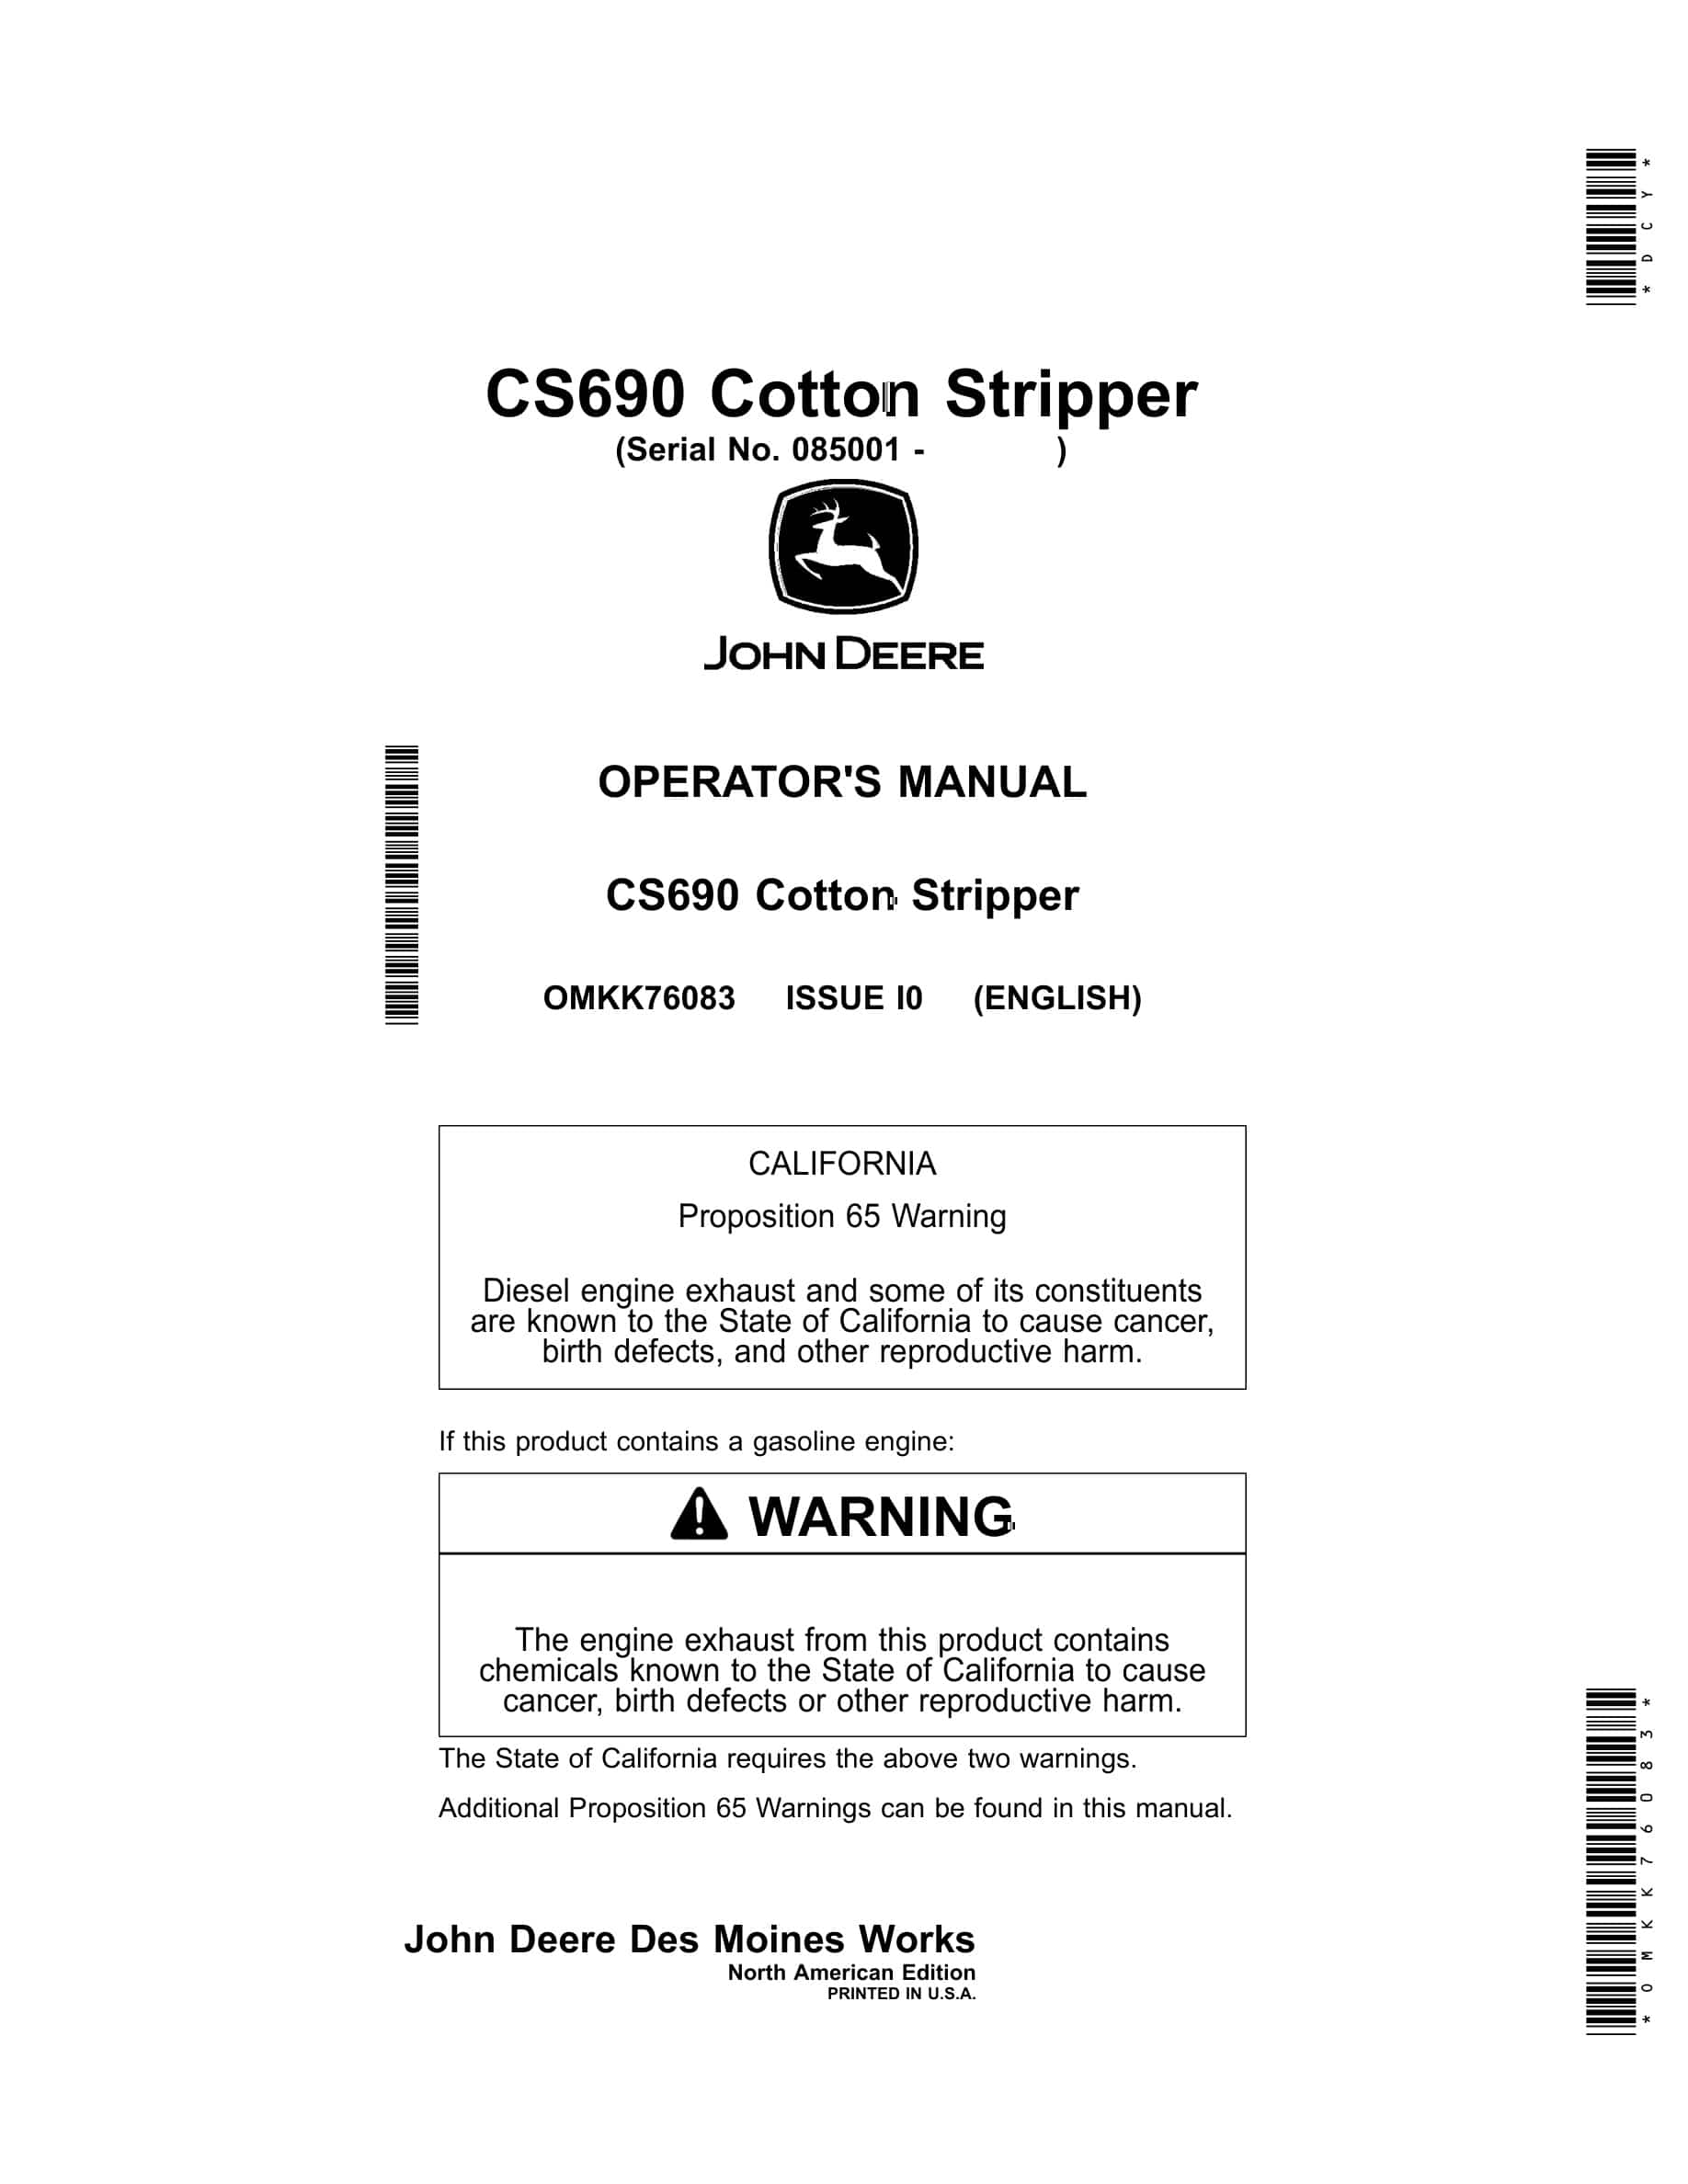 John Deere CS690 Cotton Stripper Operator Manual OMKK76083-1